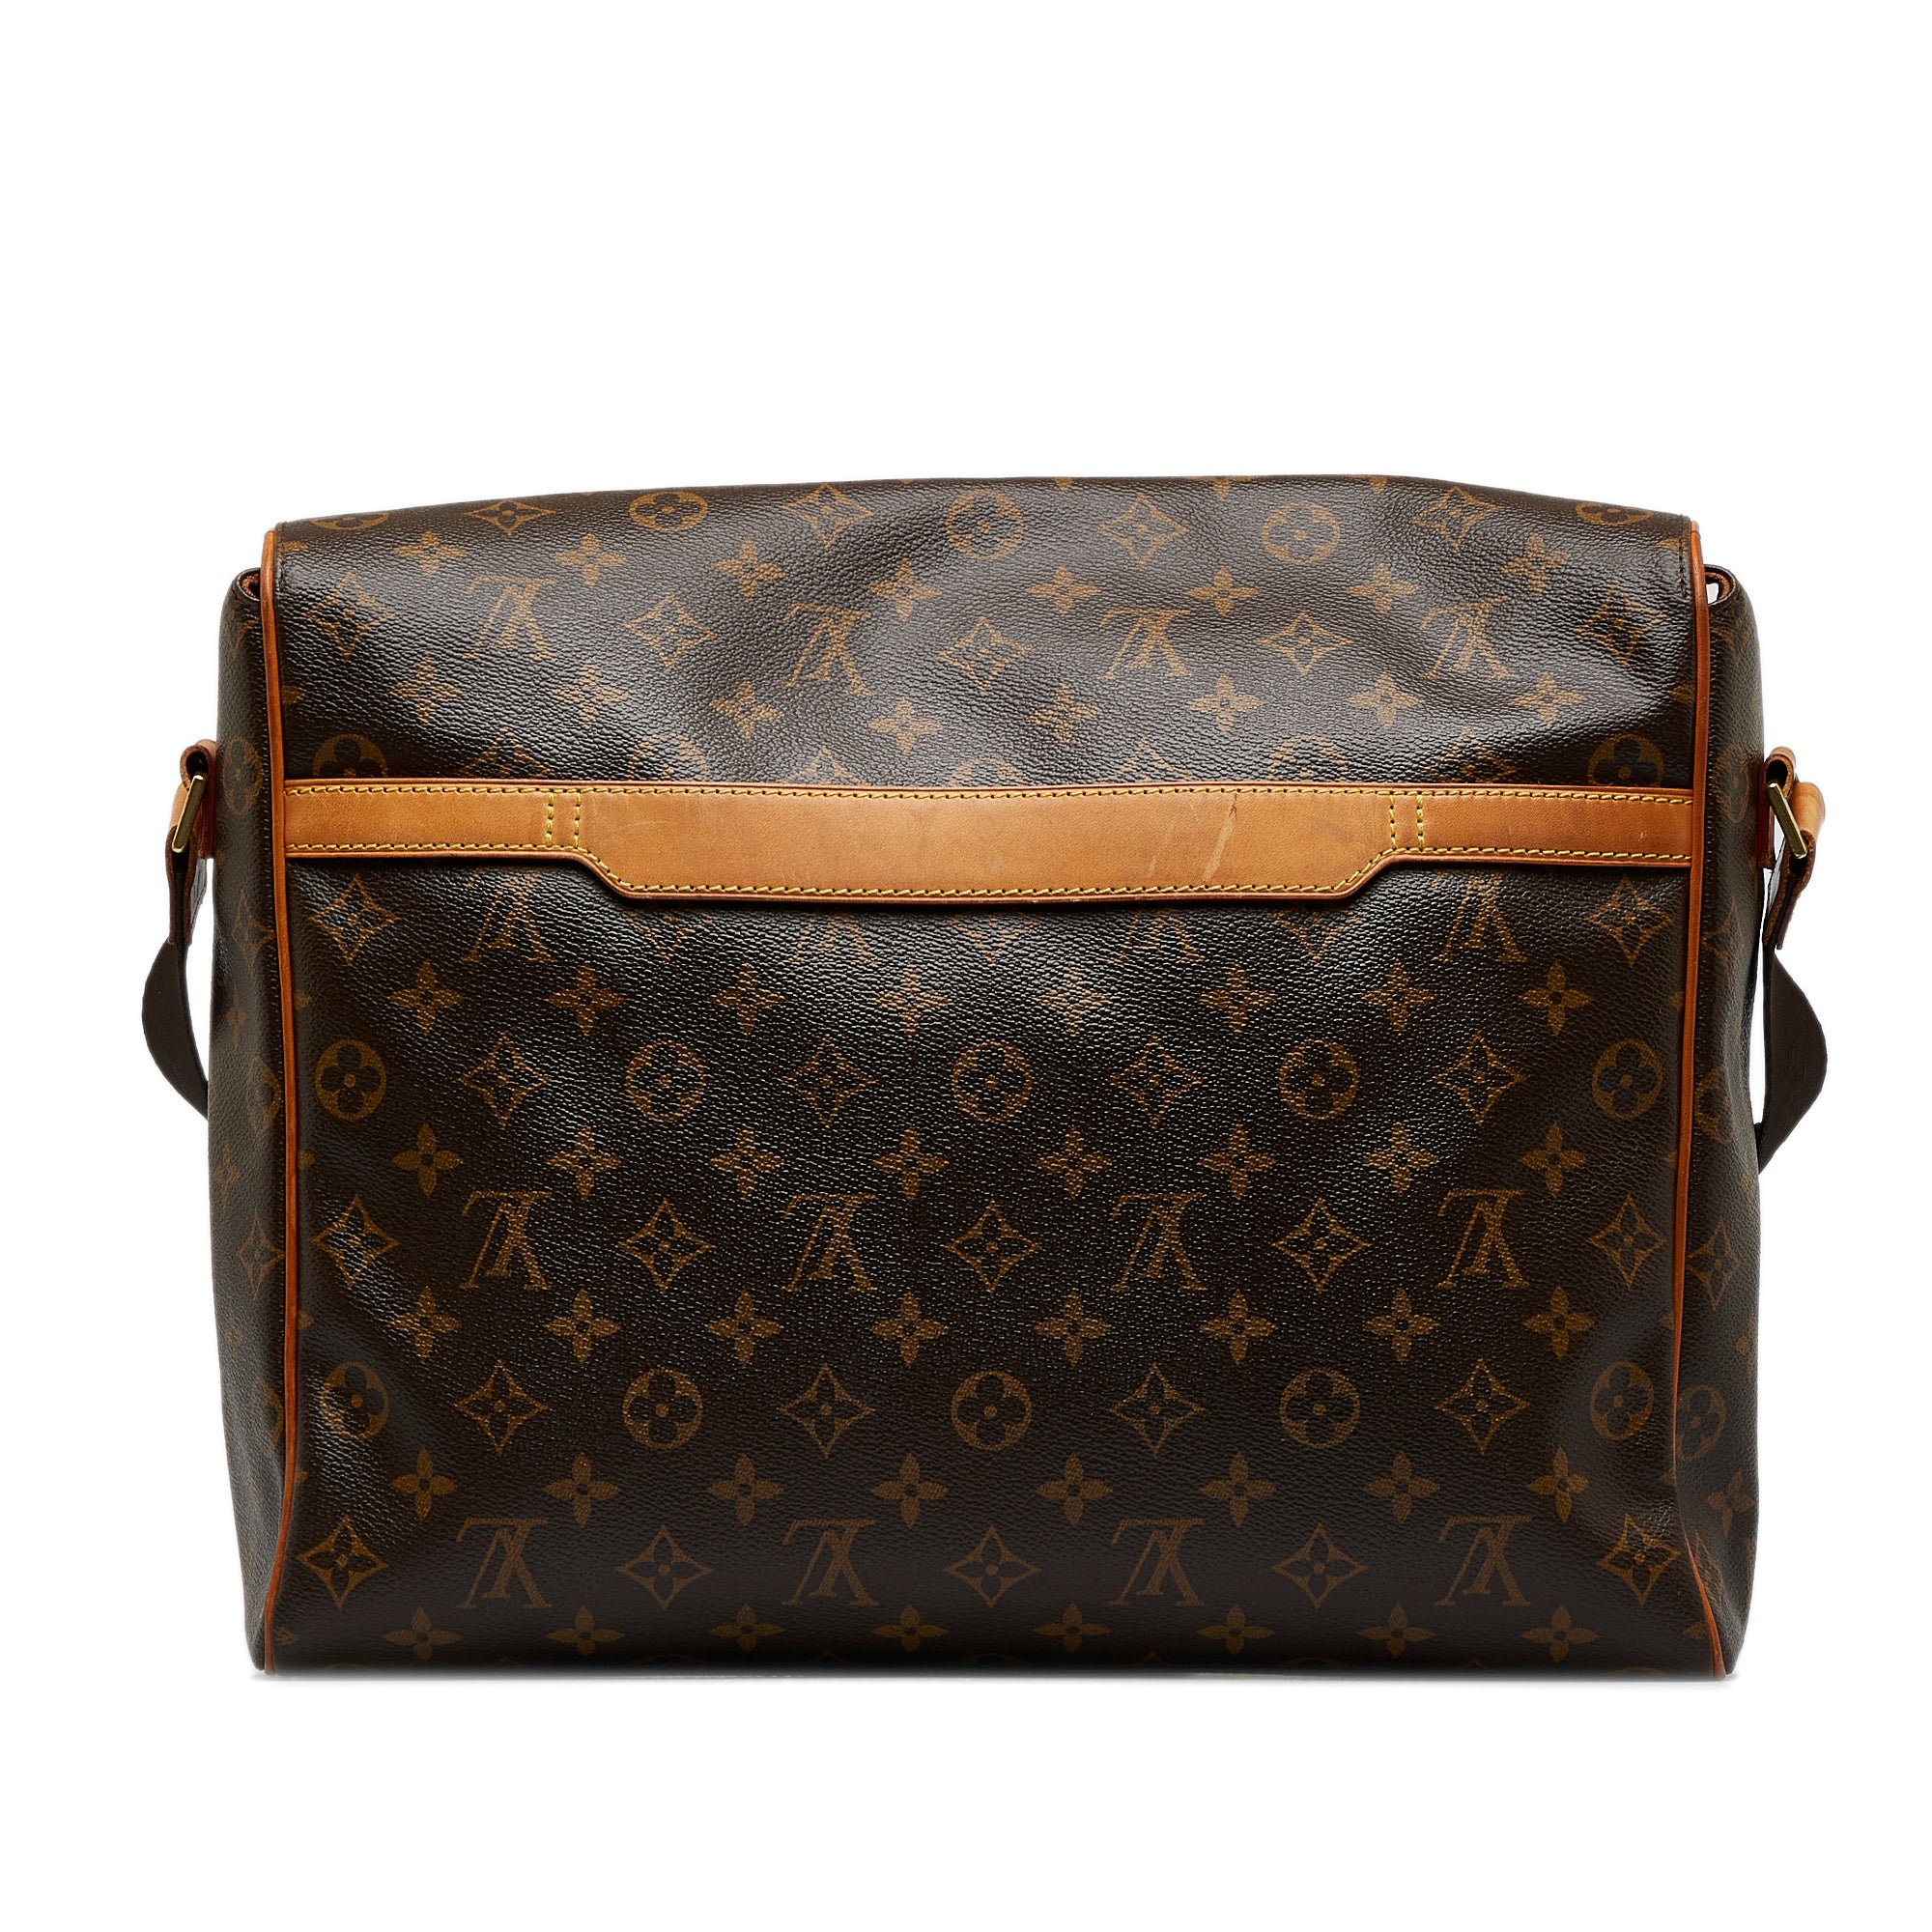 Authentic Louis Vuitton monogram Abbesses crossbody messenger bag